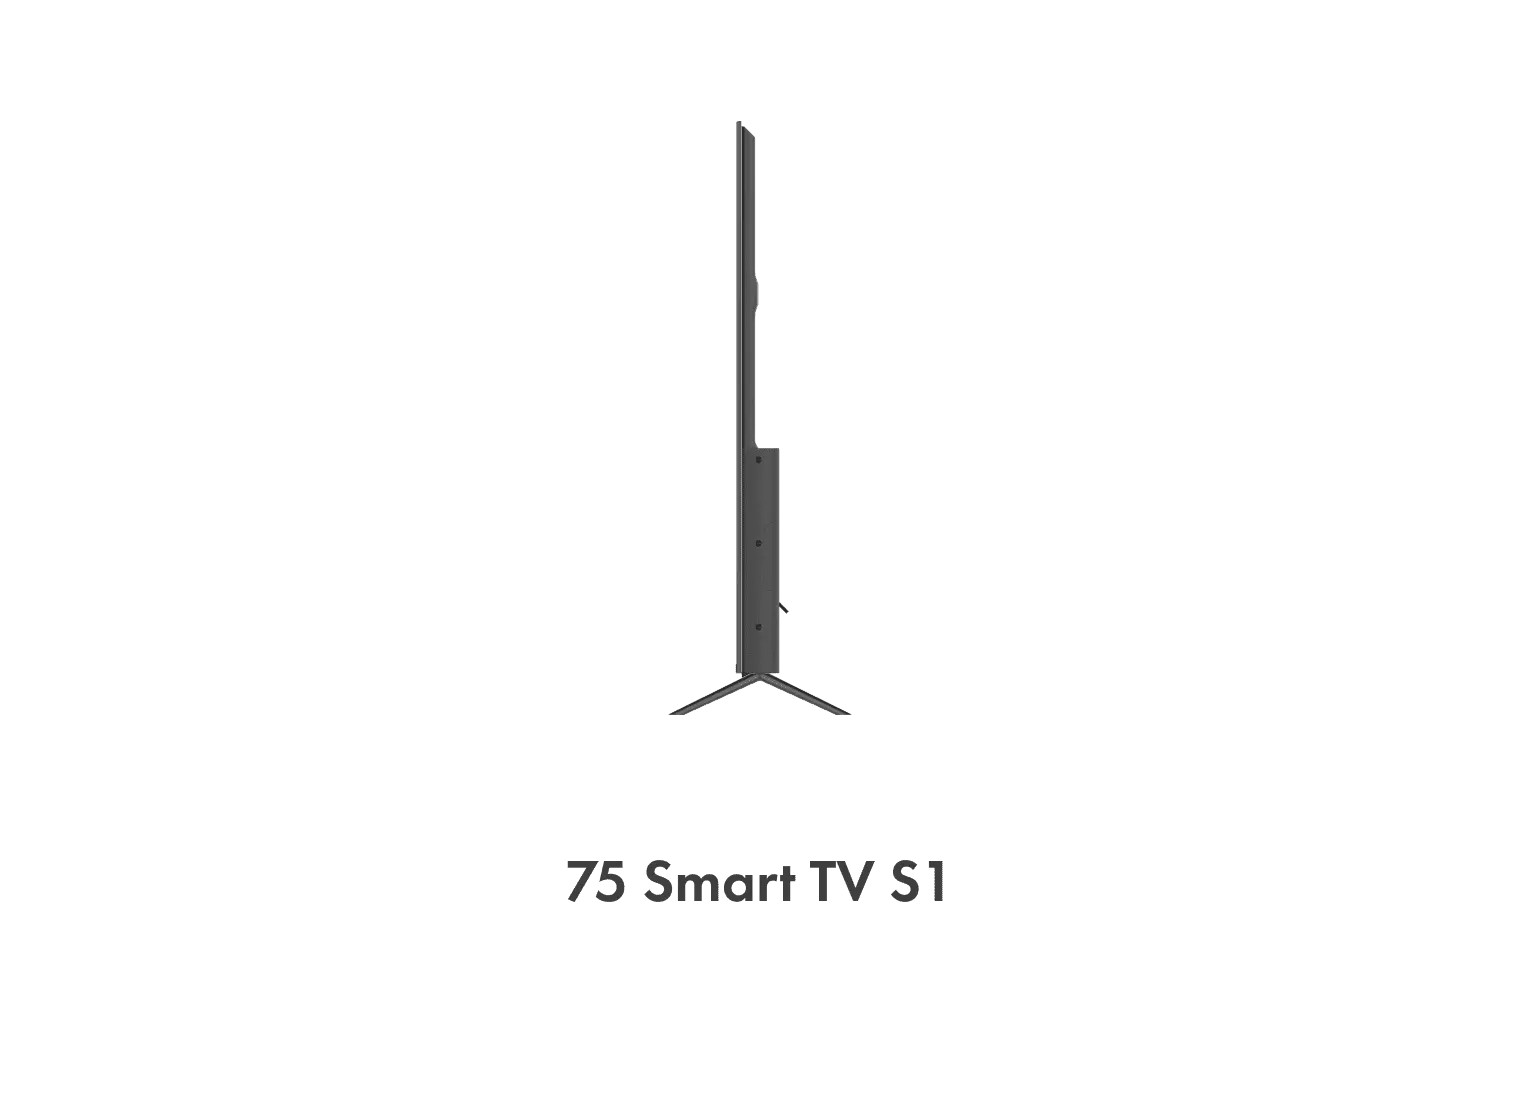 Телевизор Haier 75 Smart TV S1